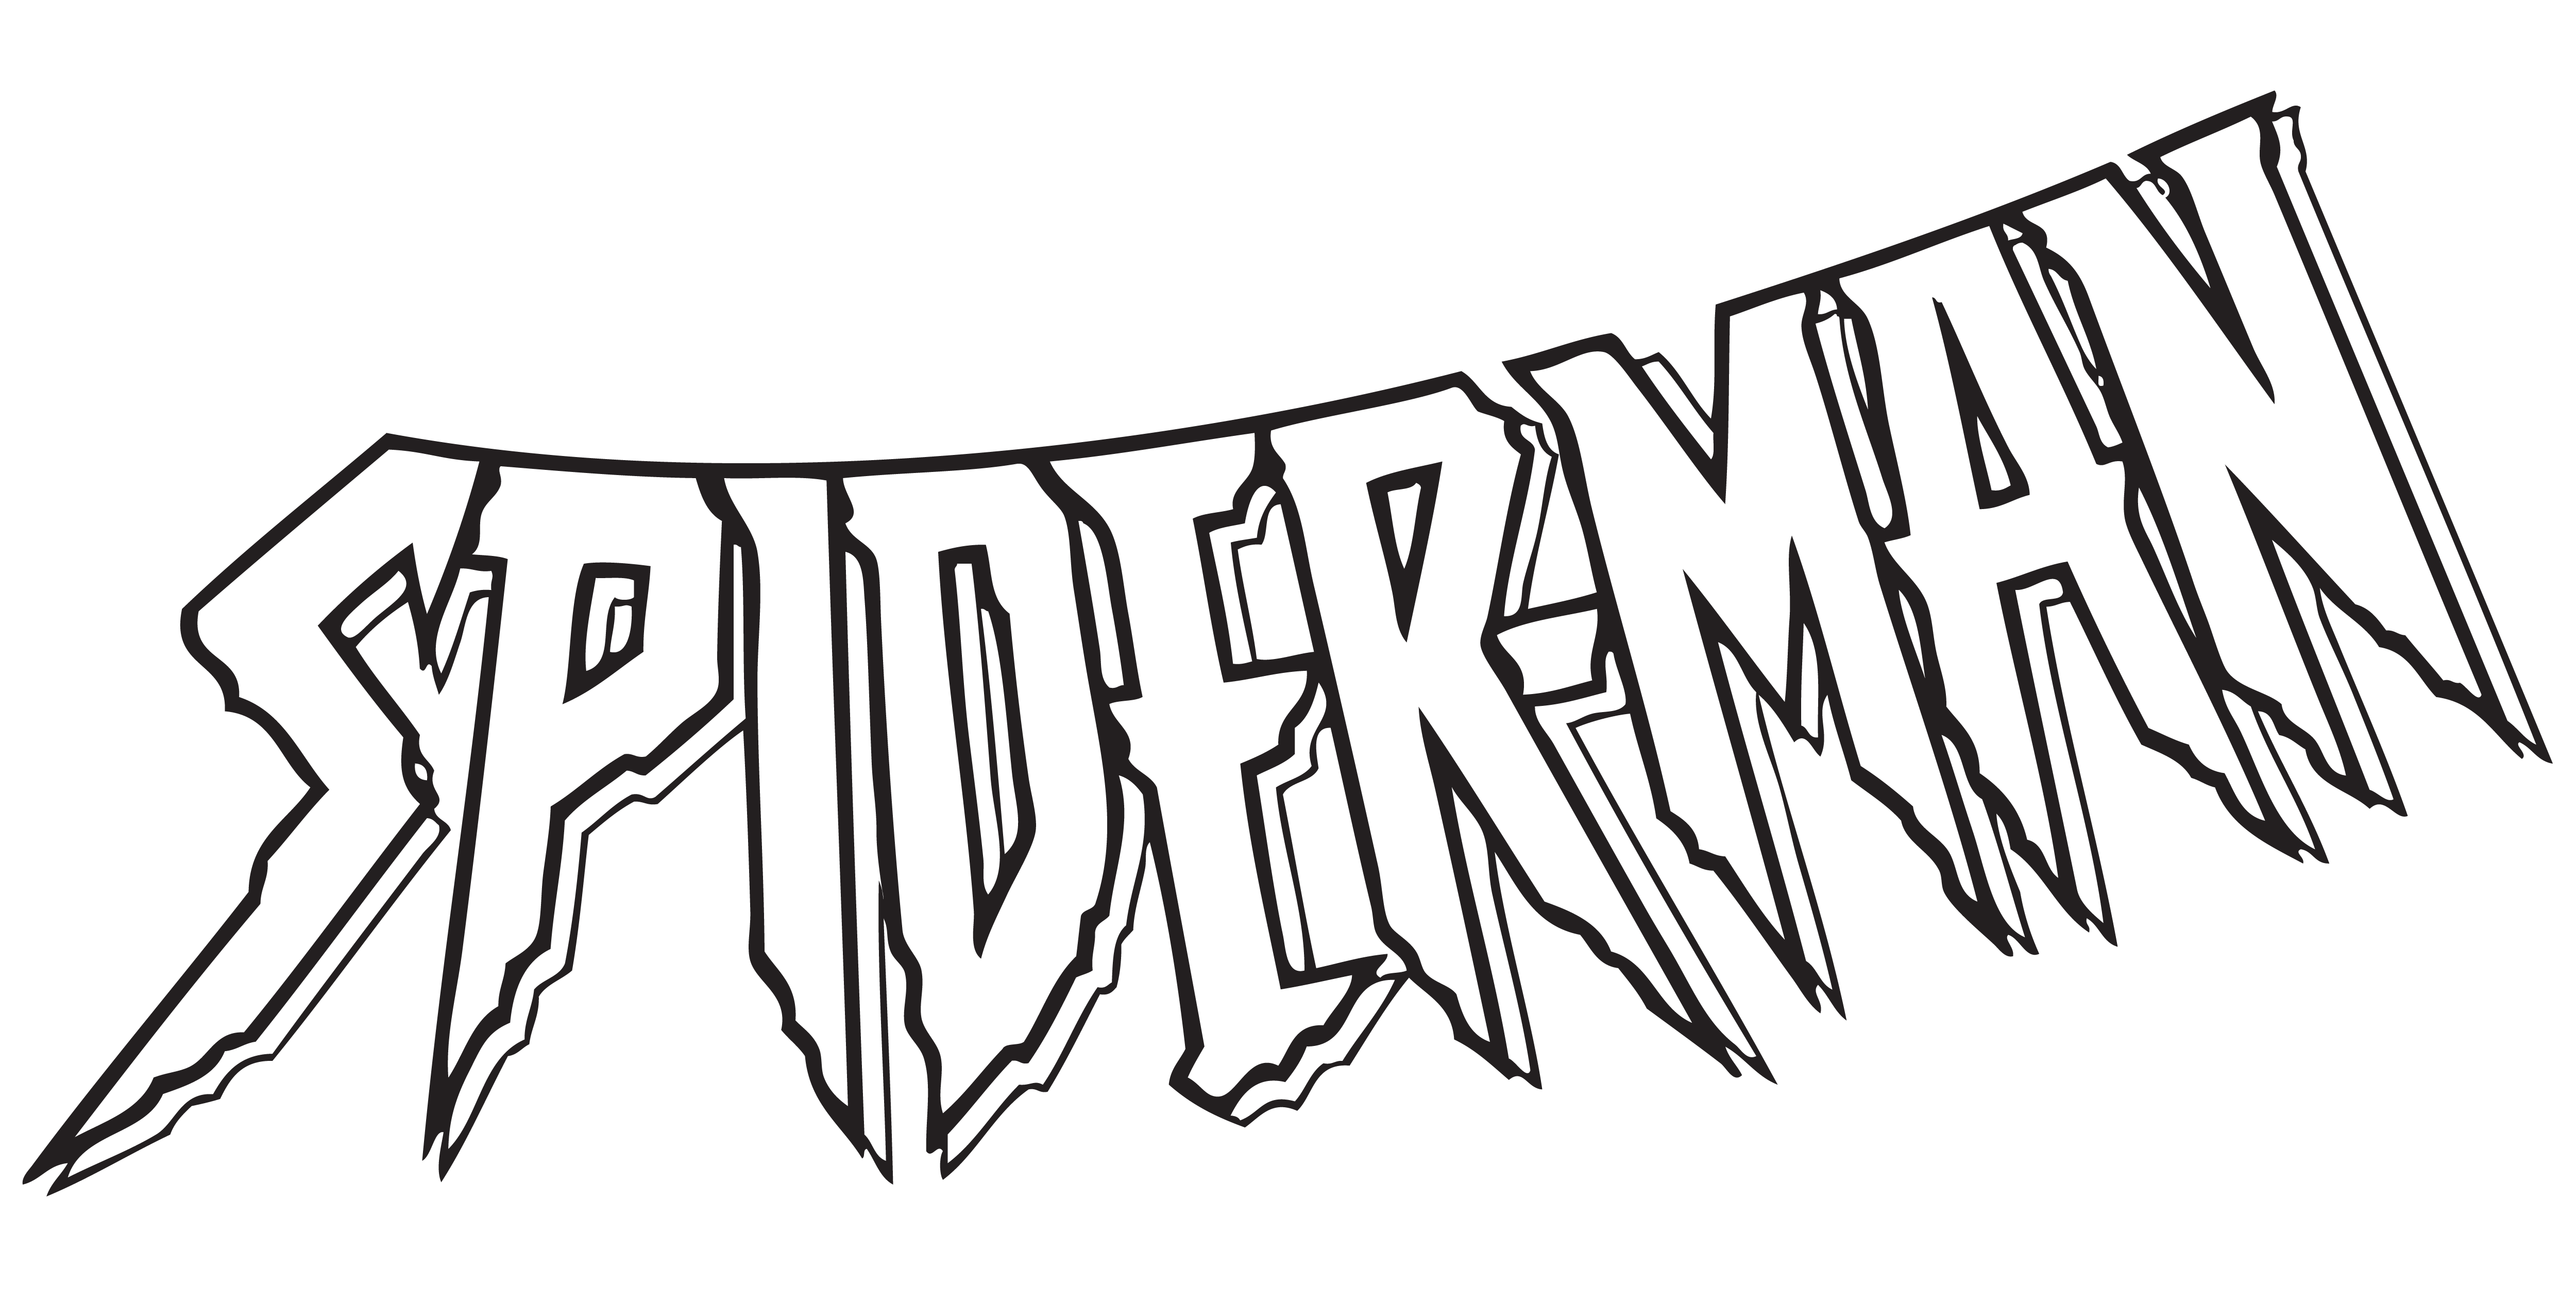 738 Spiderman Logo Images, Stock Photos & Vectors | Shutterstock